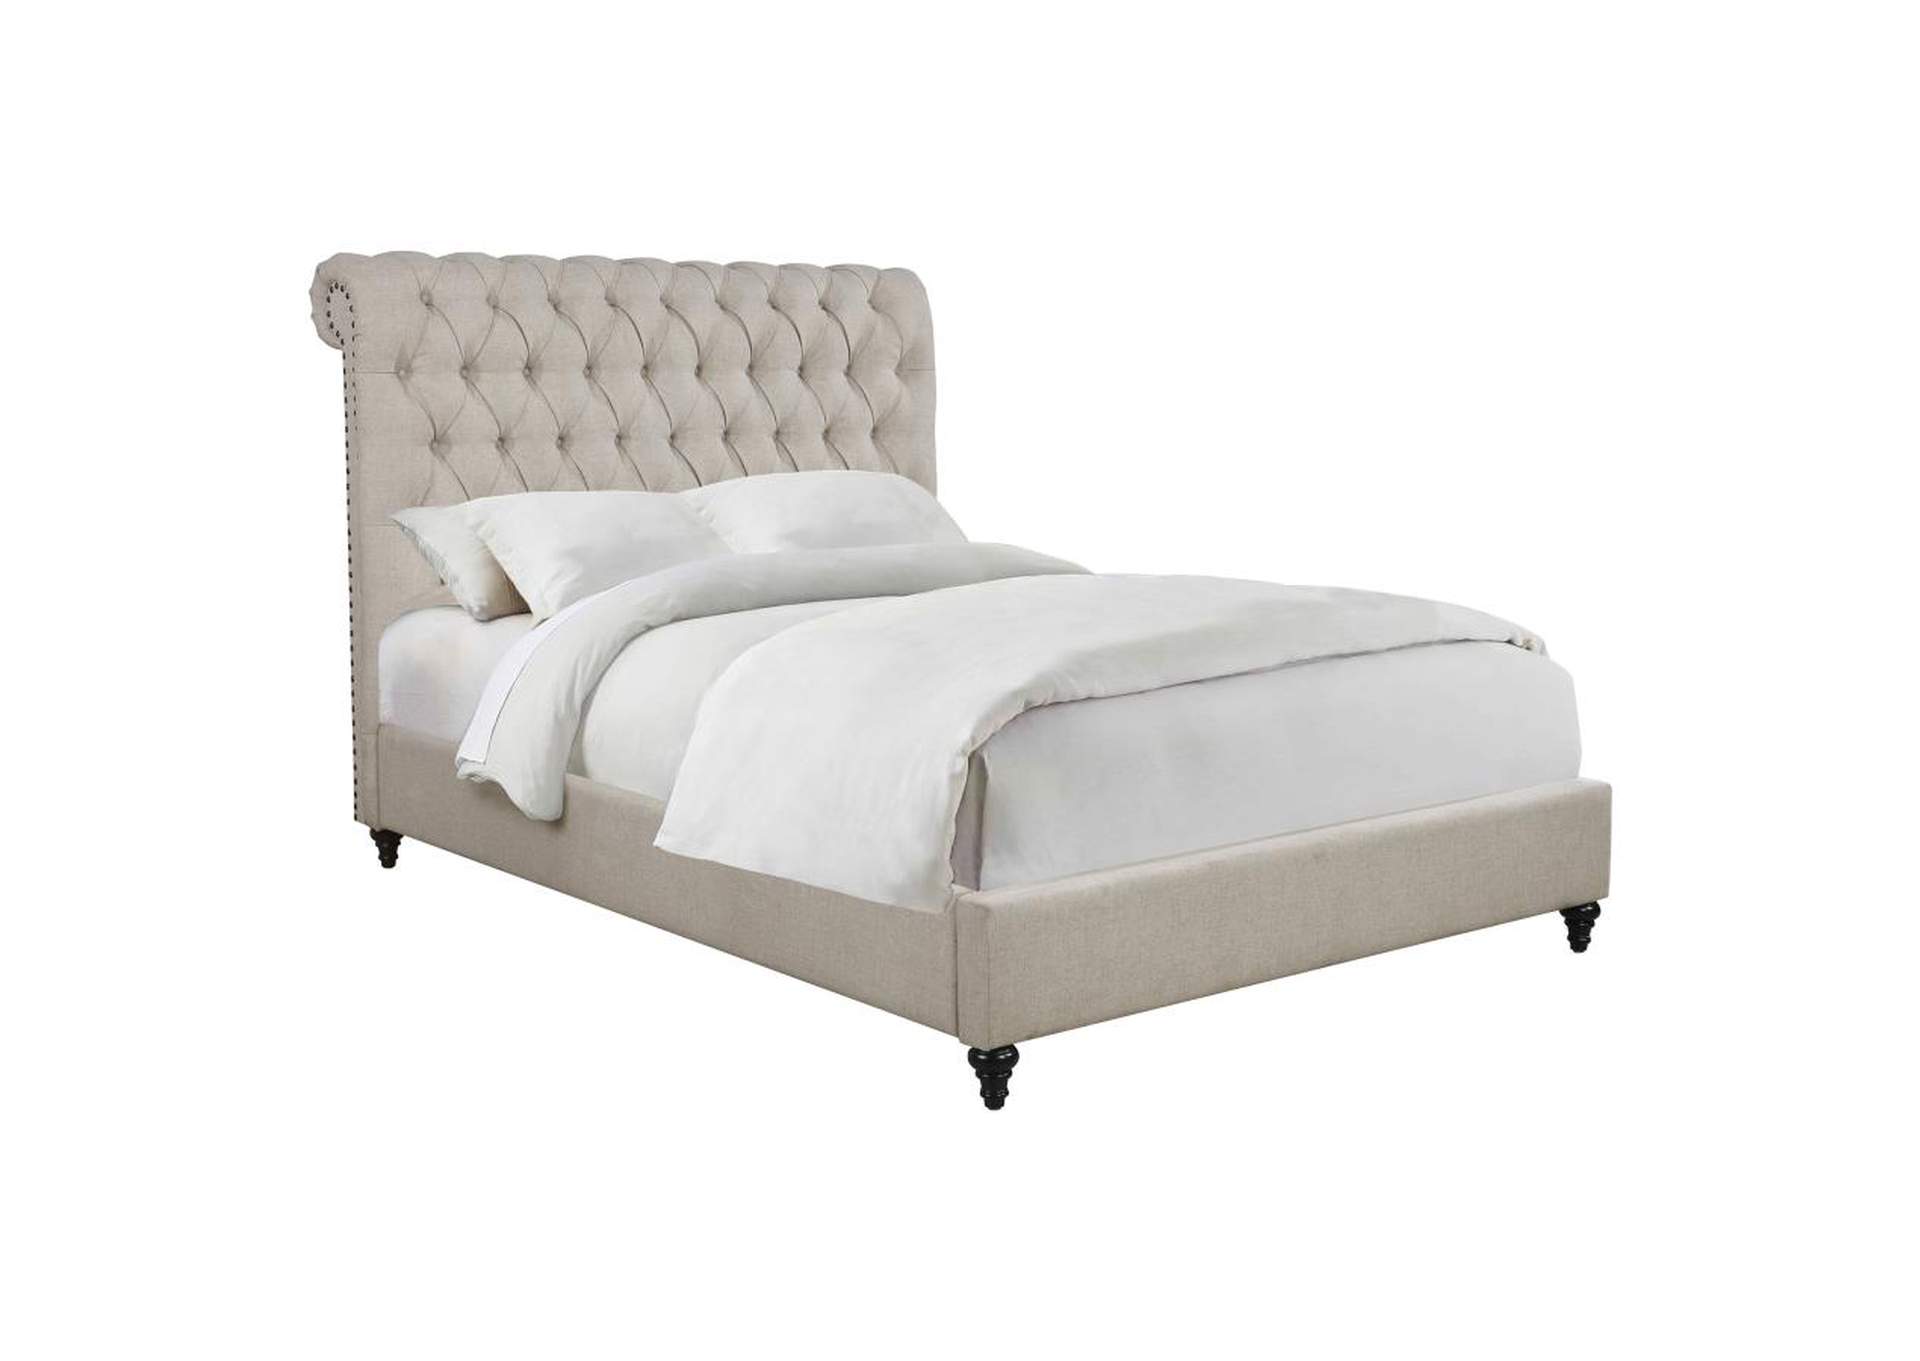 Devon Button Tufted Upholstered Queen Bed Beige,Coaster Furniture